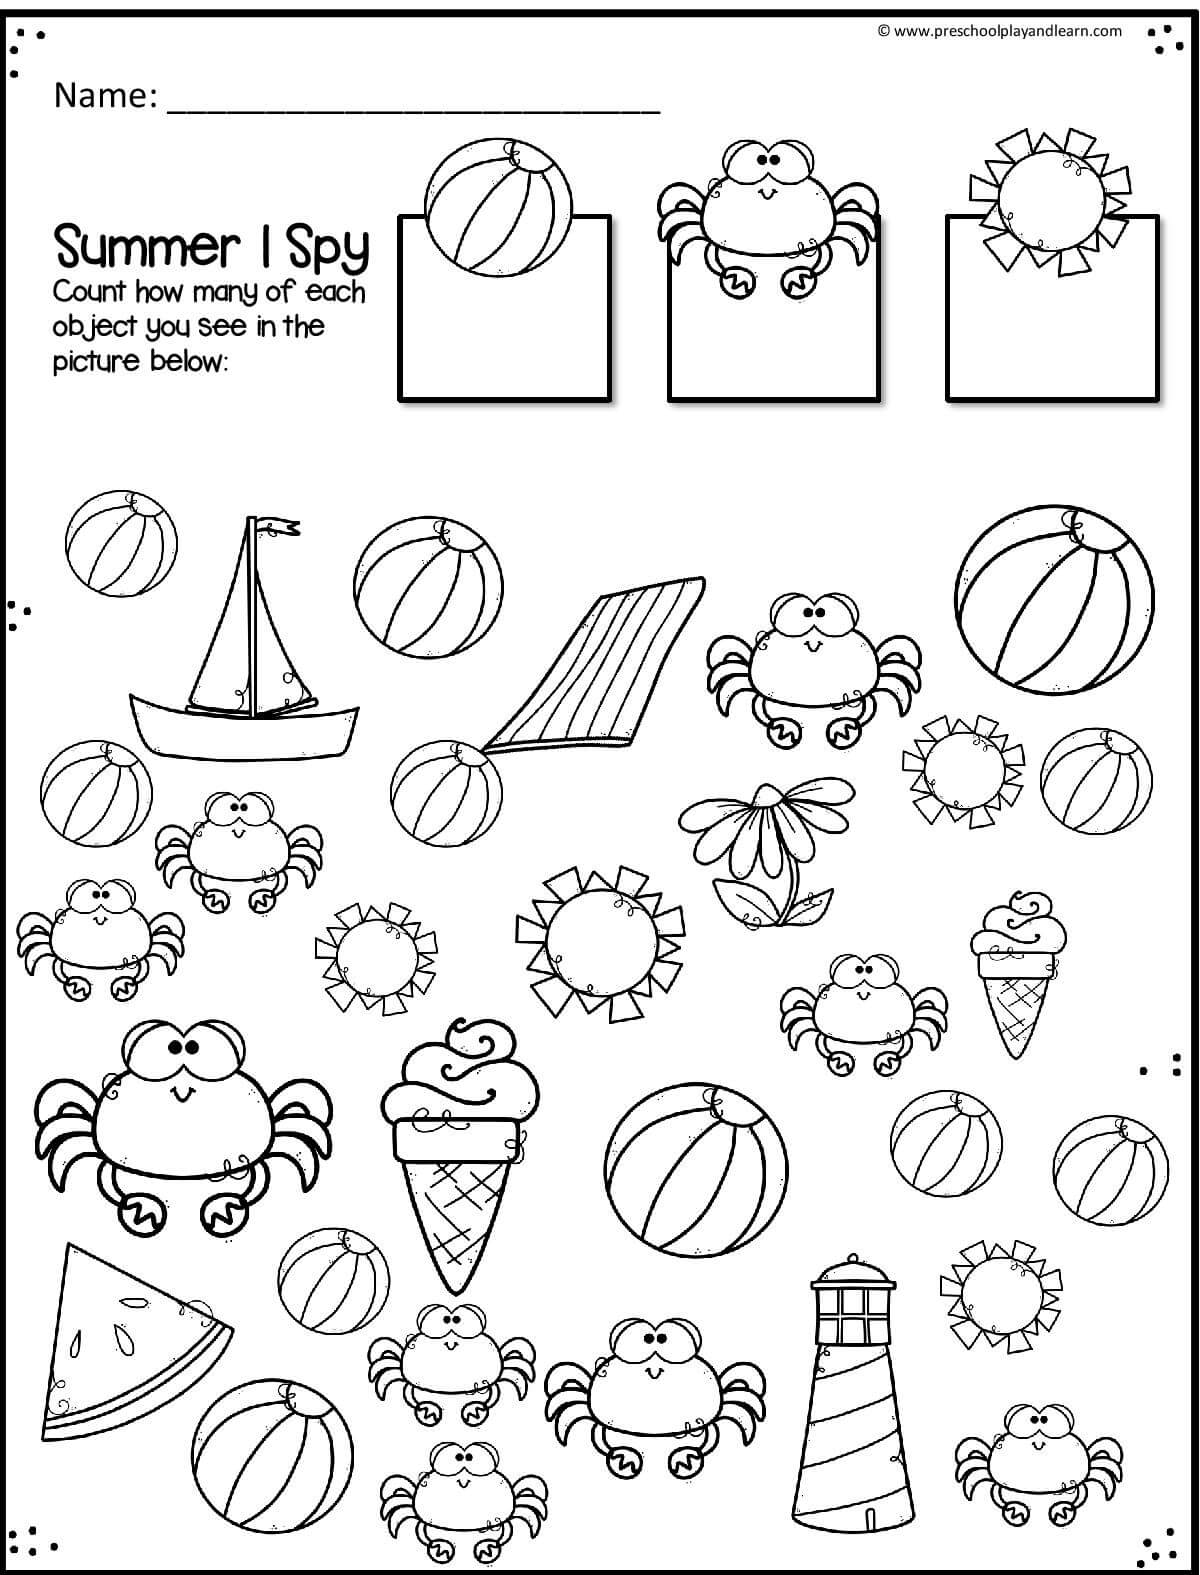 FREE Preschool Summer Math Worksheets